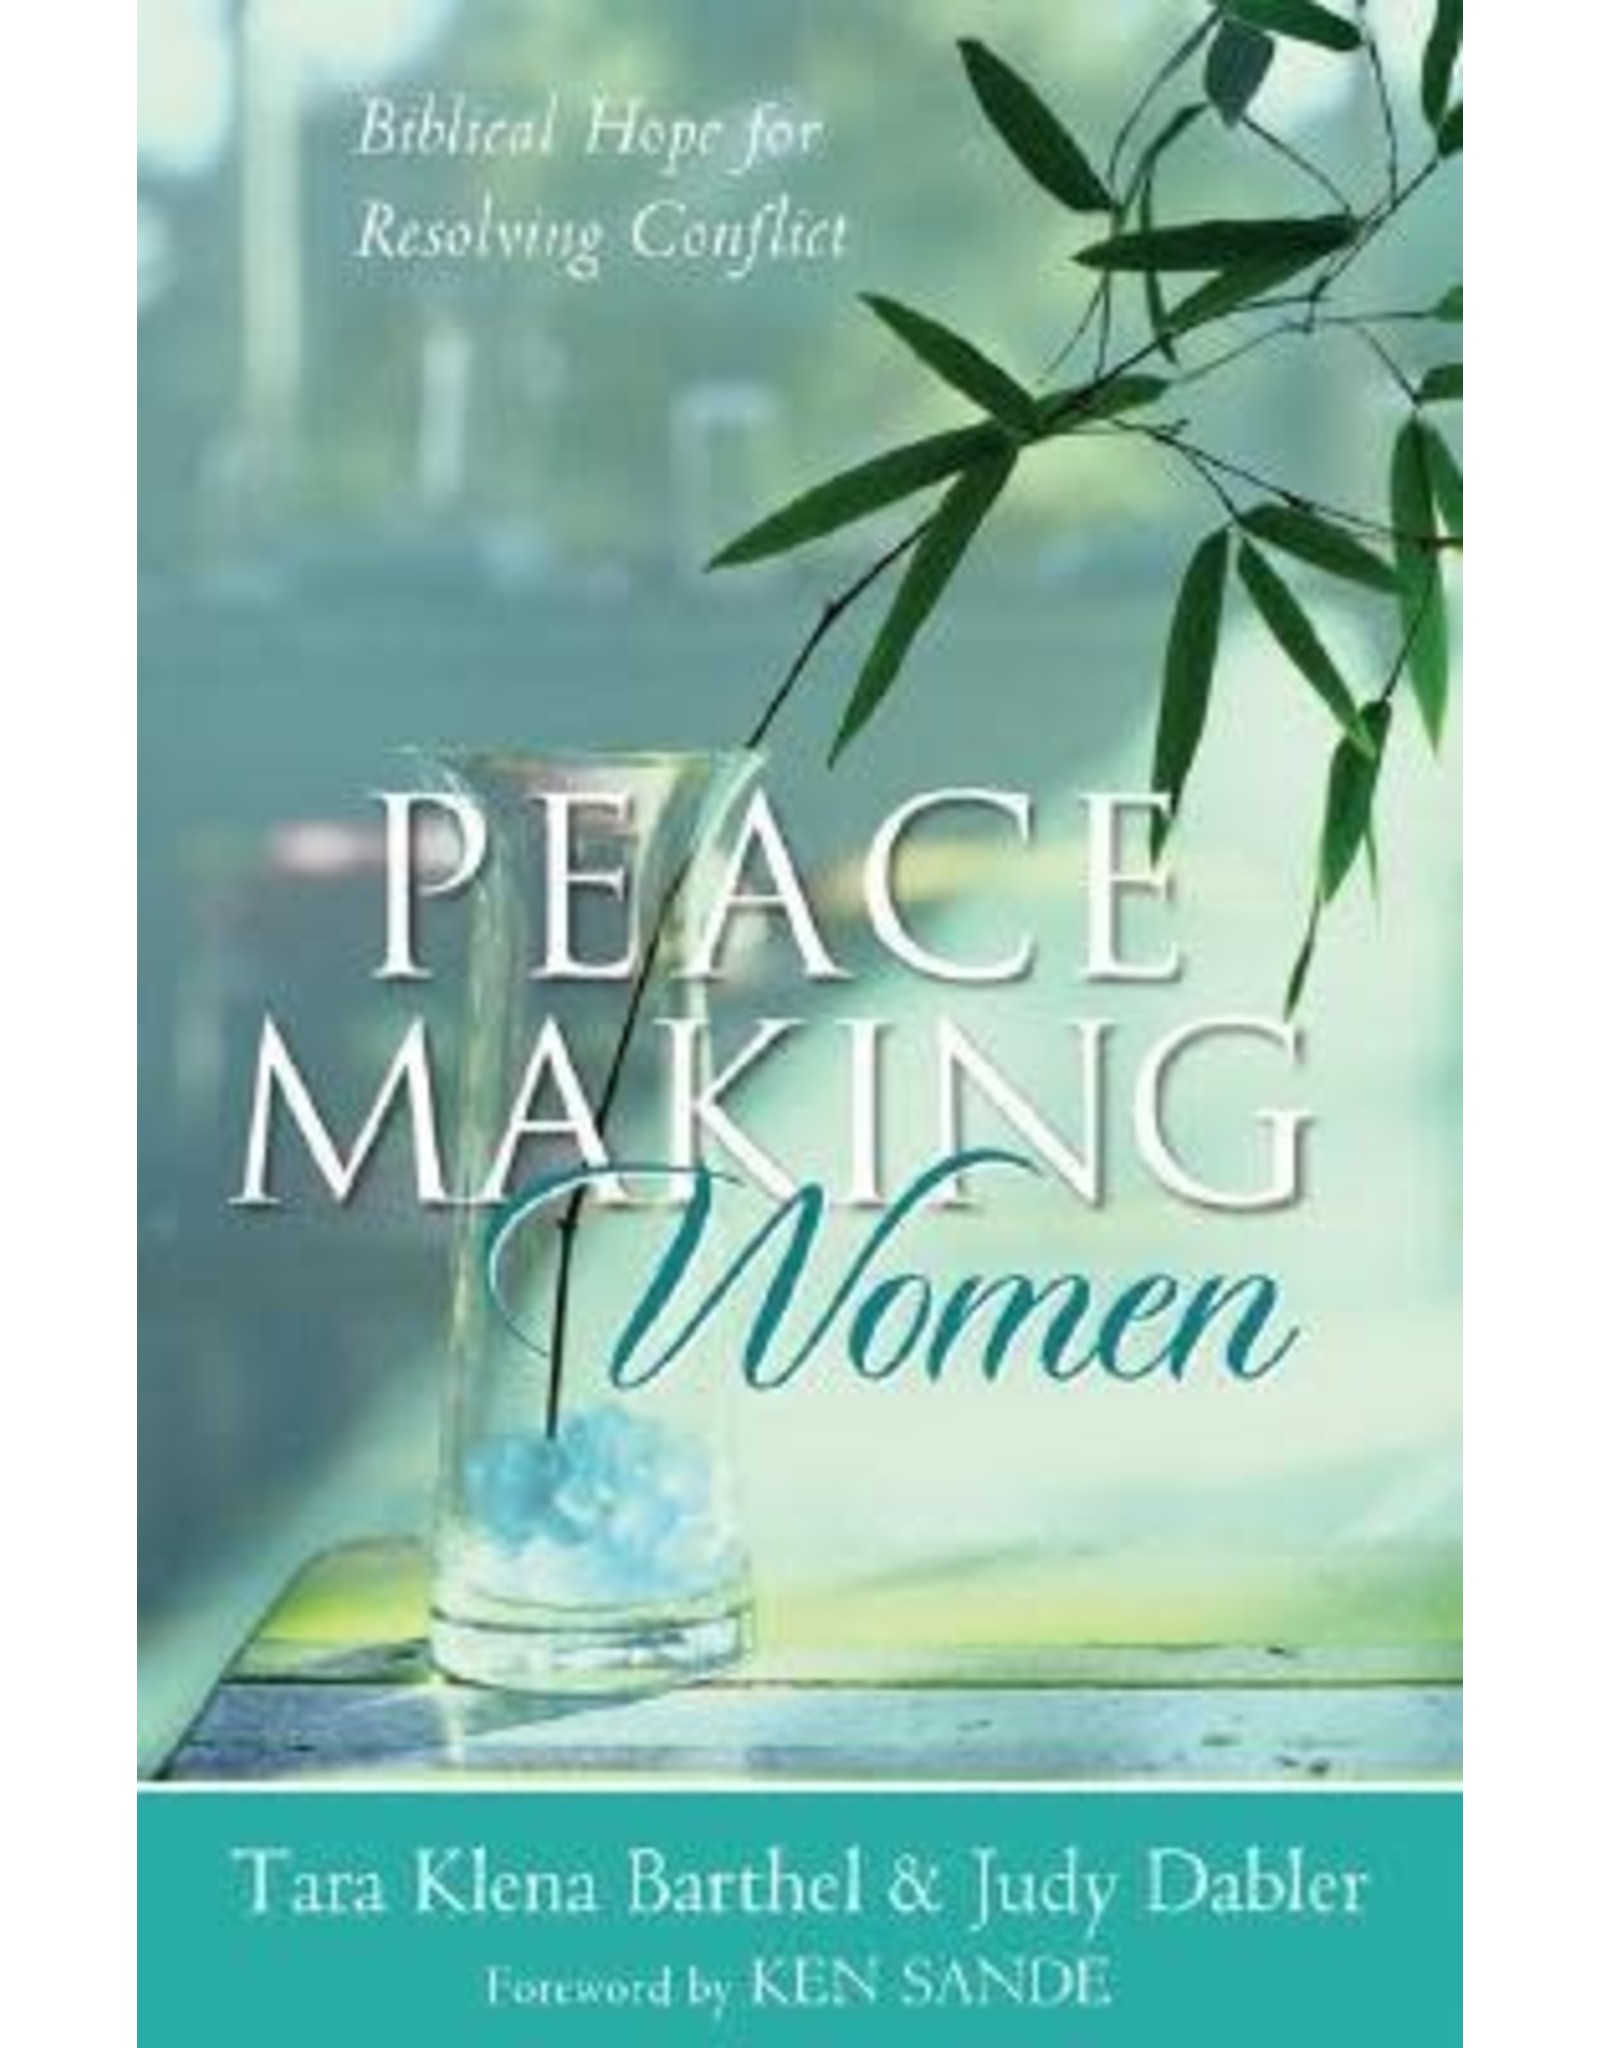 Tara Kiena Barthel & Judy Dabler Peacemaking Women